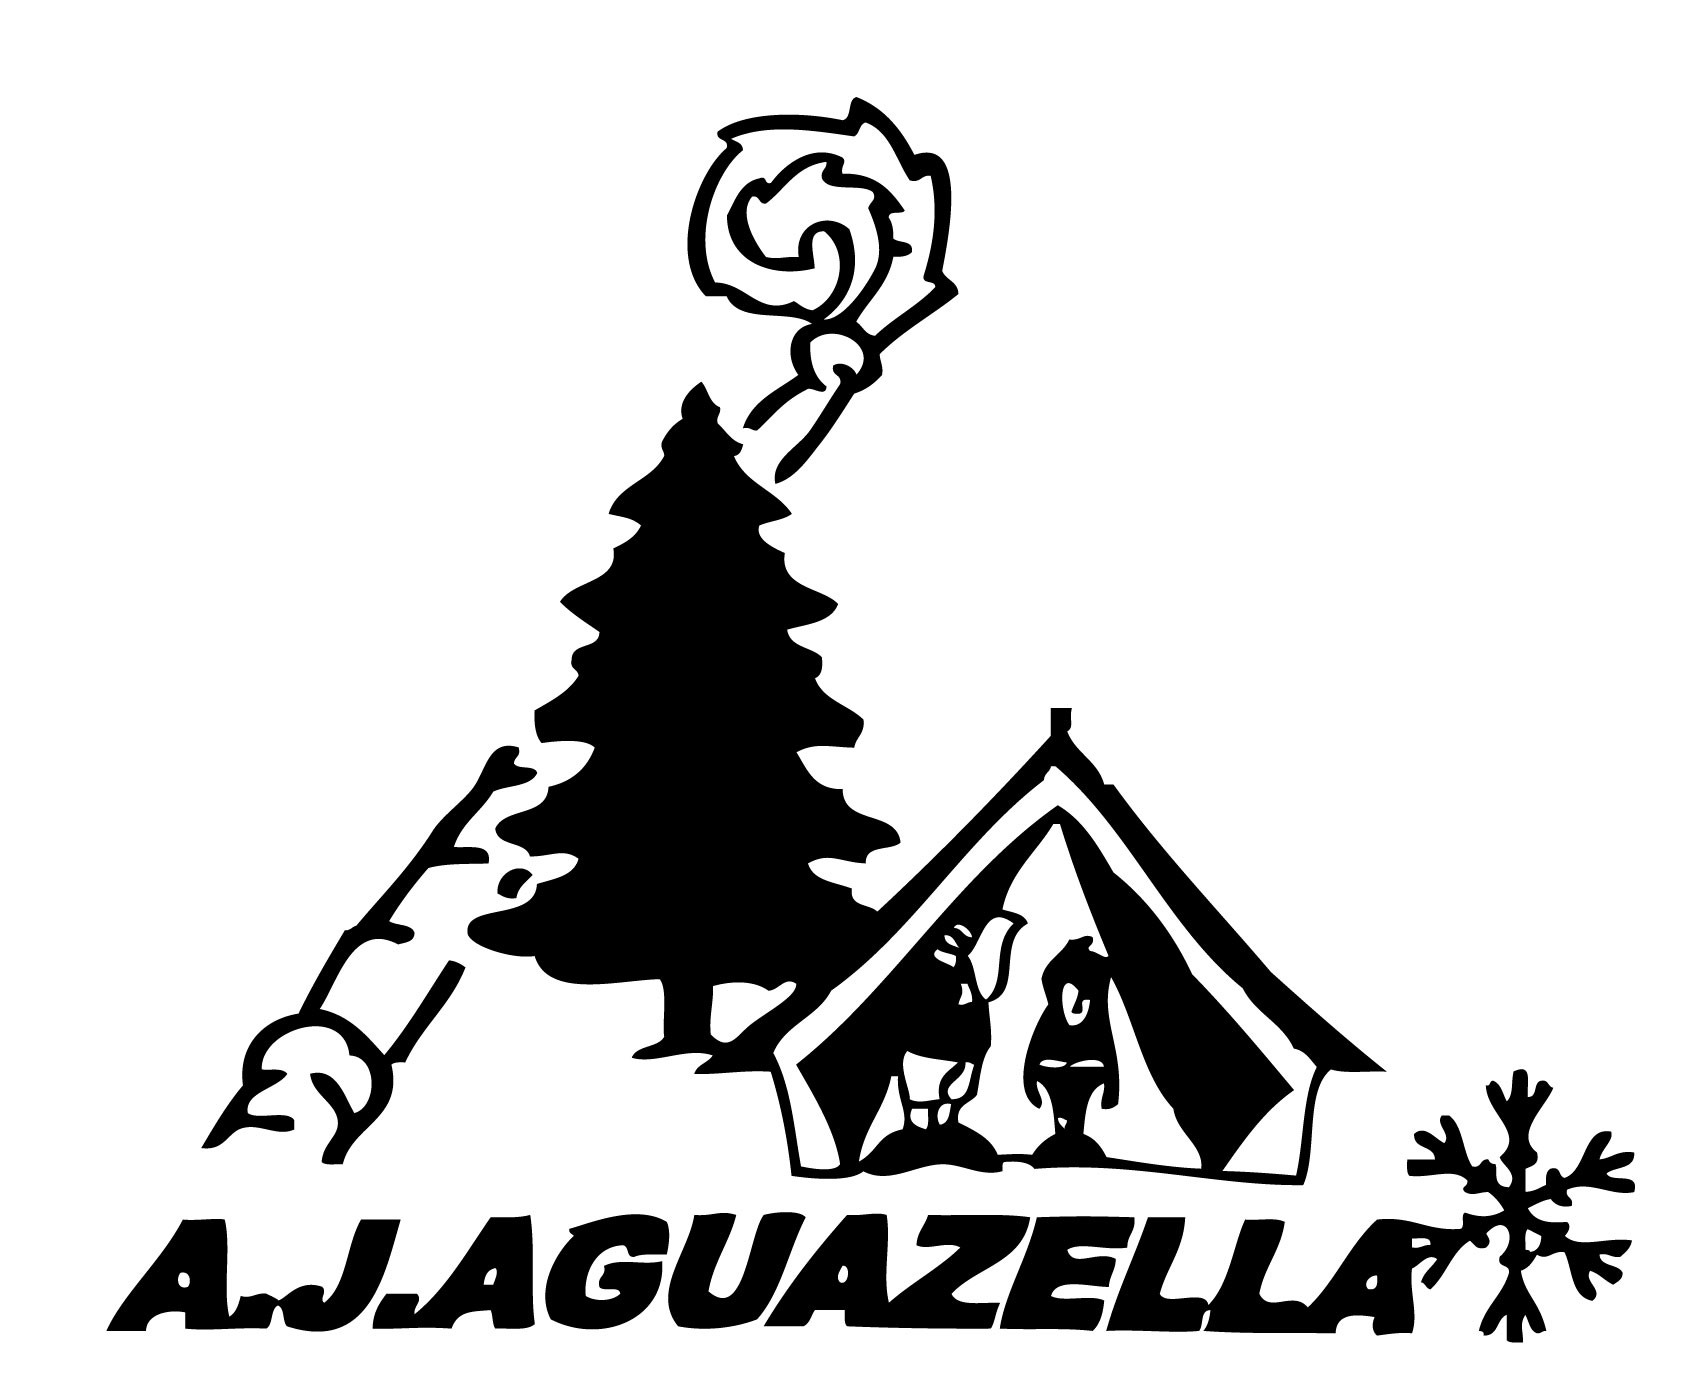 (c) Aguazella.com